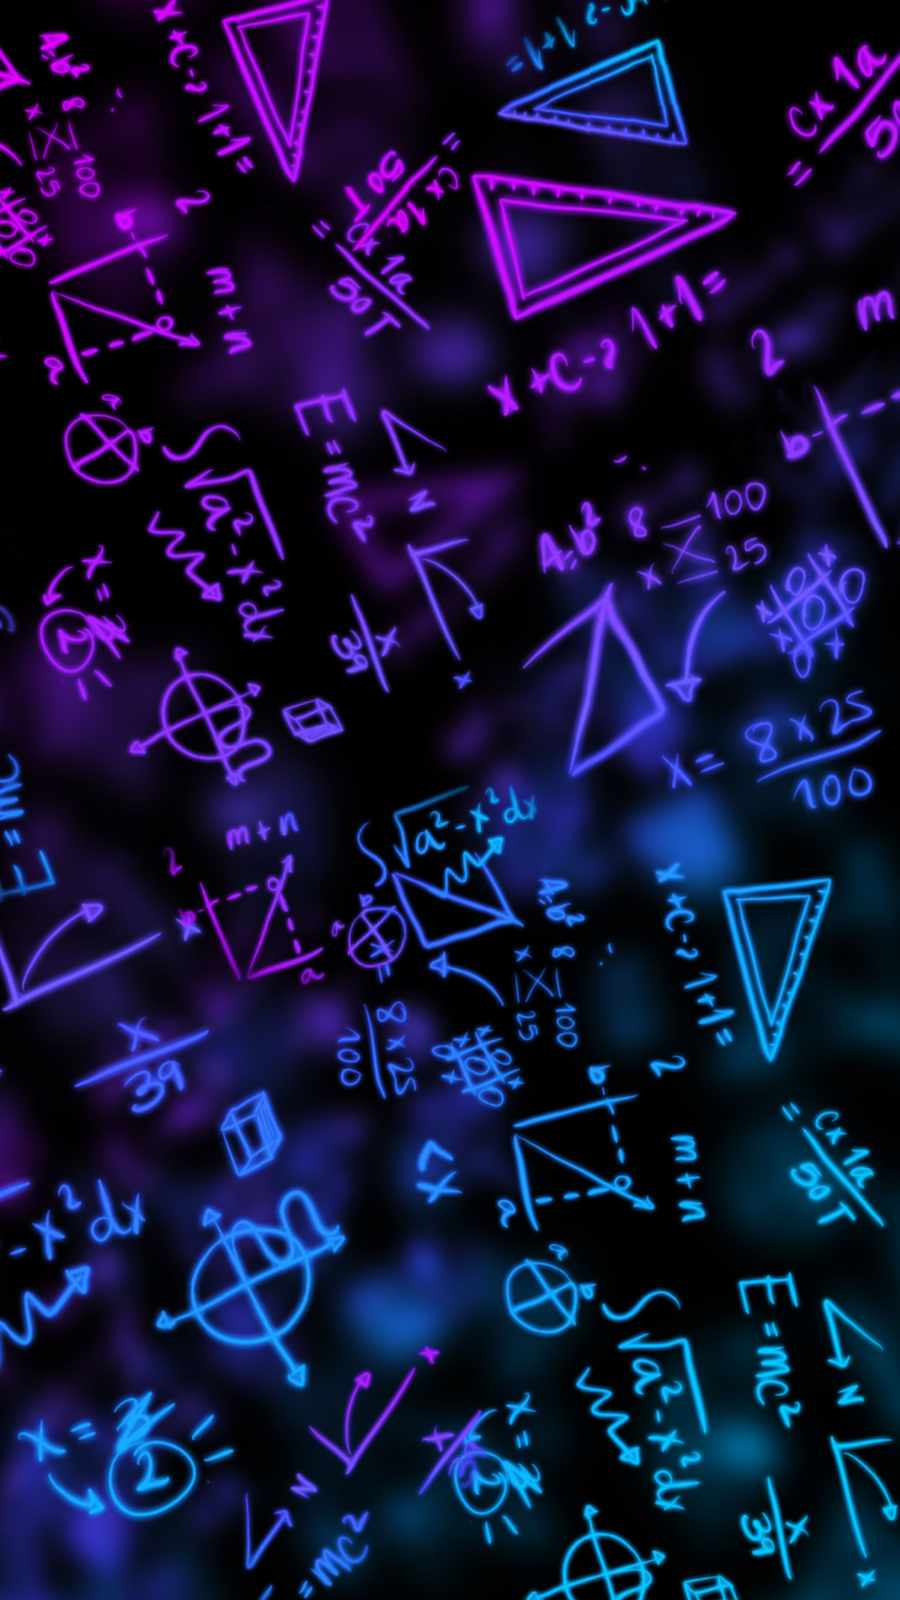 A close up of some math symbols - Math